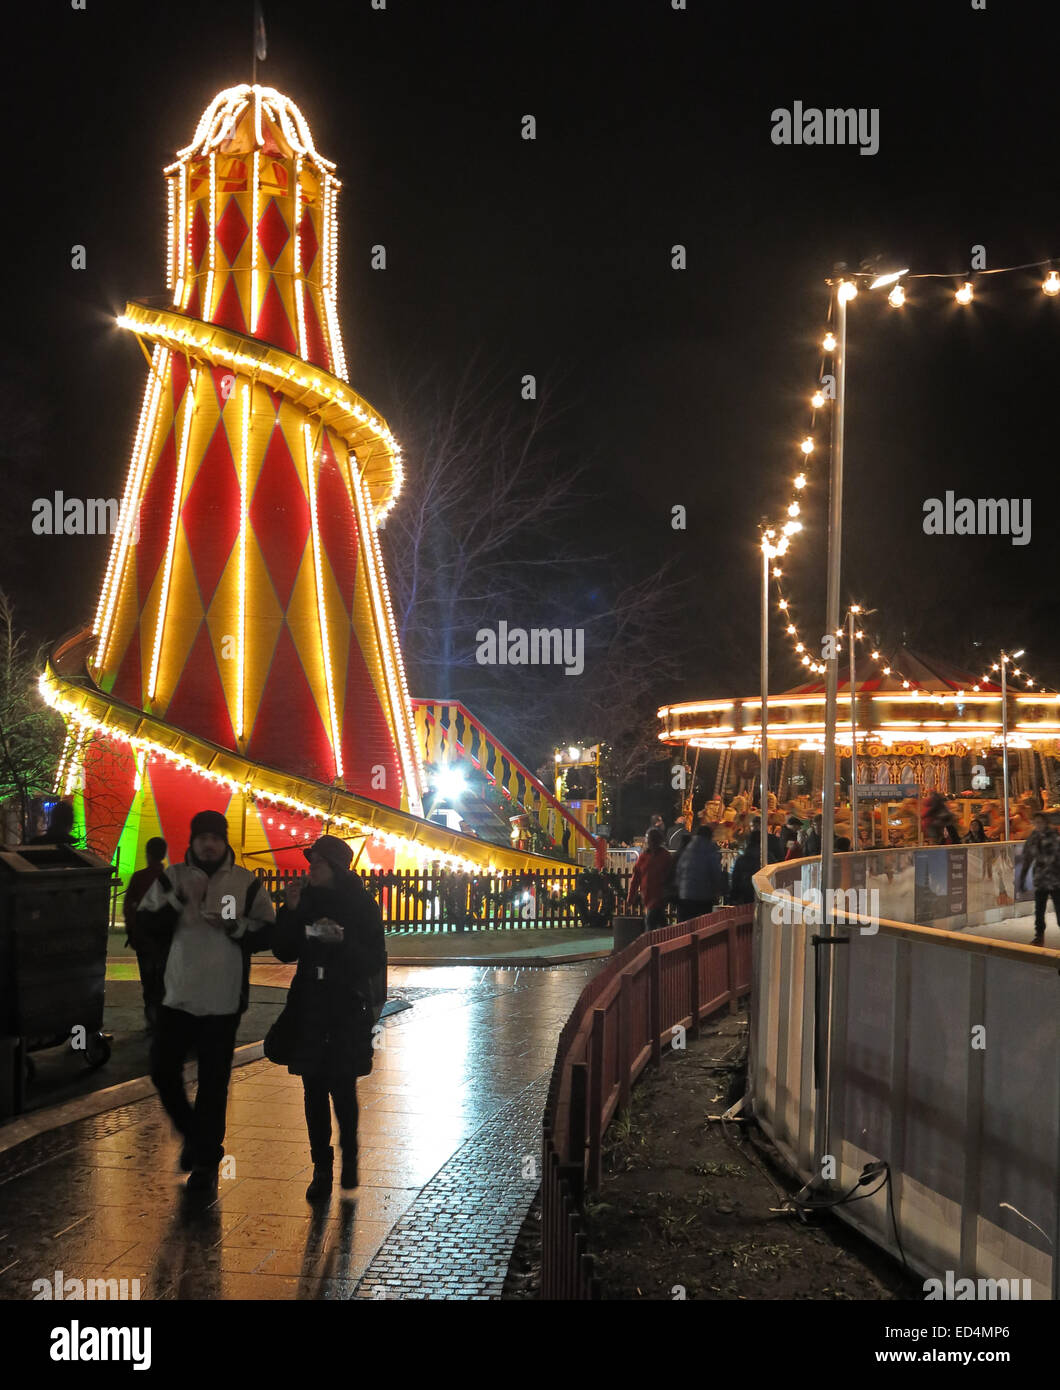 Traditional fairground attractions at Night at Edinburgh's Hogmanay Scotland Stock Photo